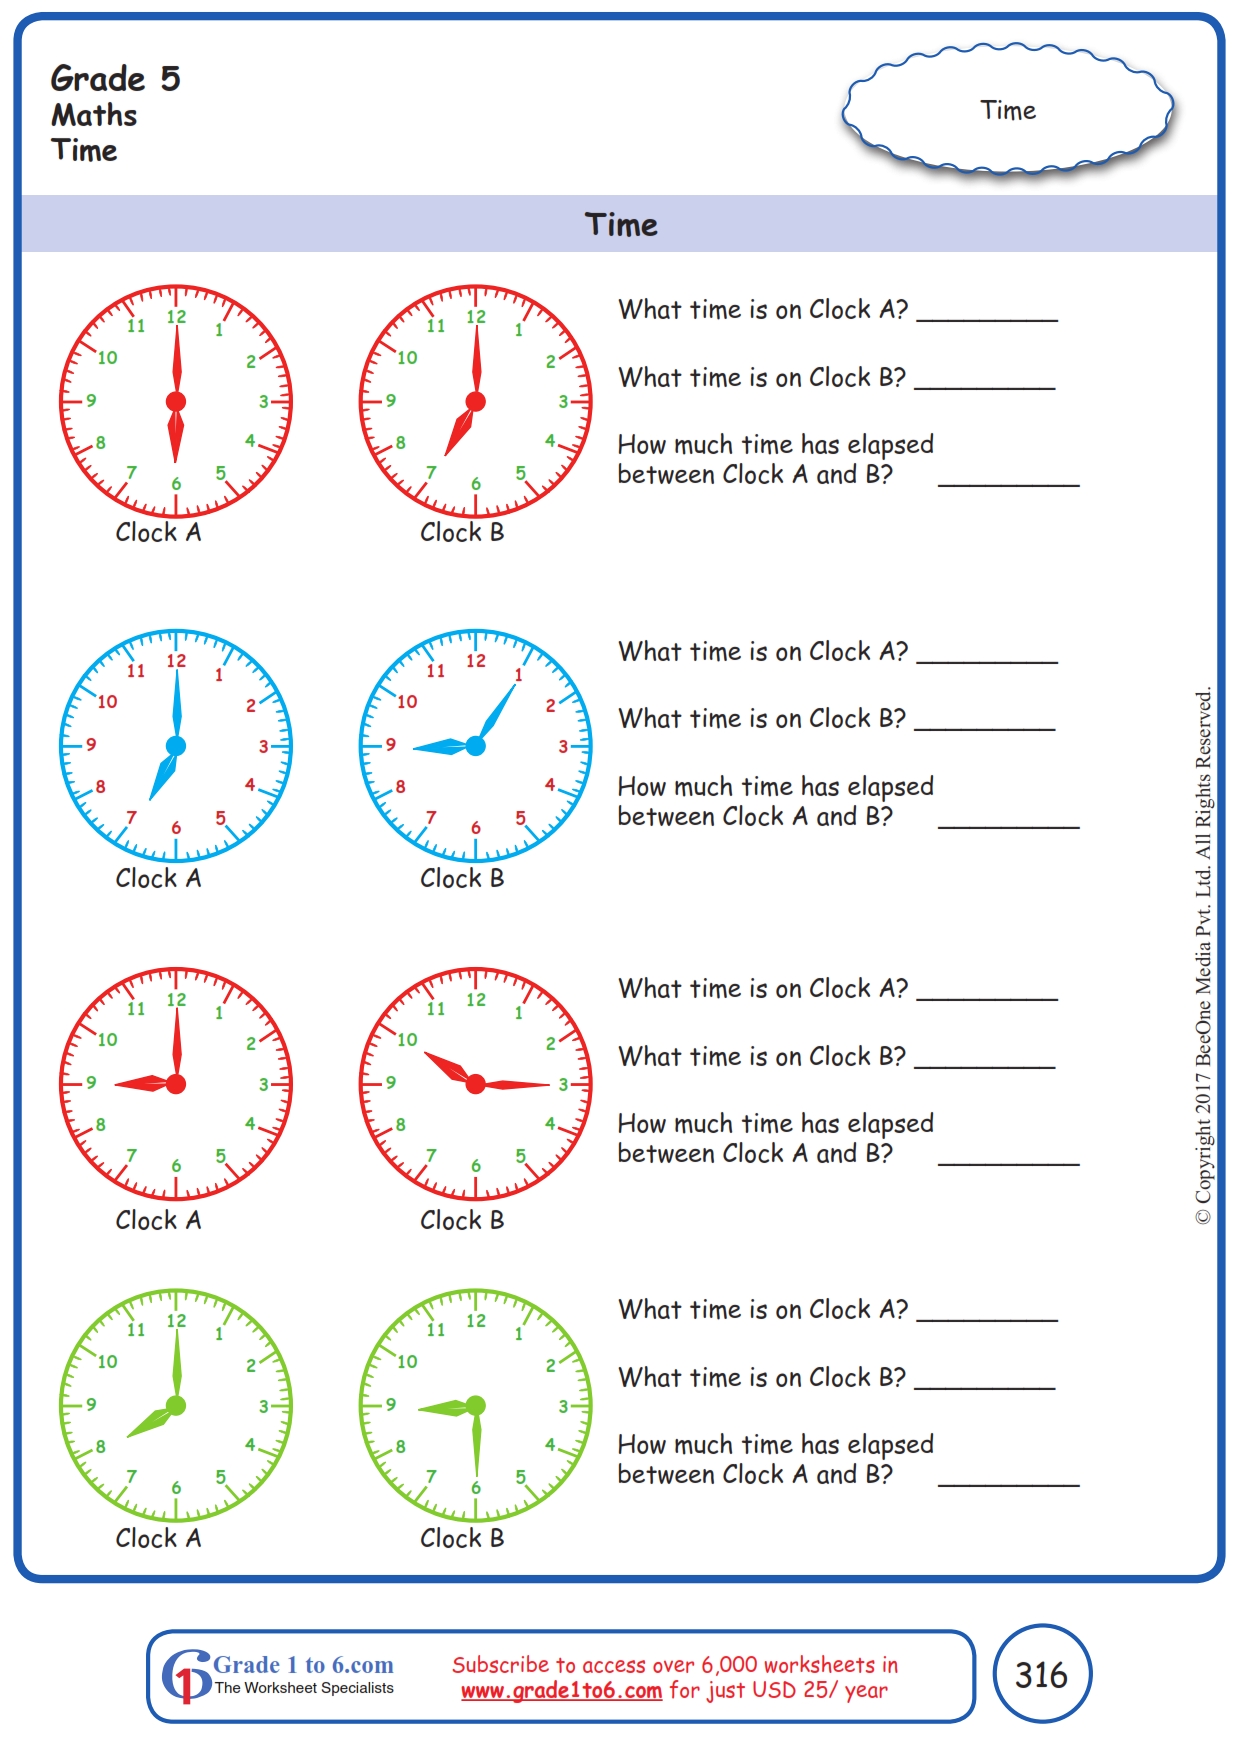 telling time worksheets grade 5wwwgrade1to6com